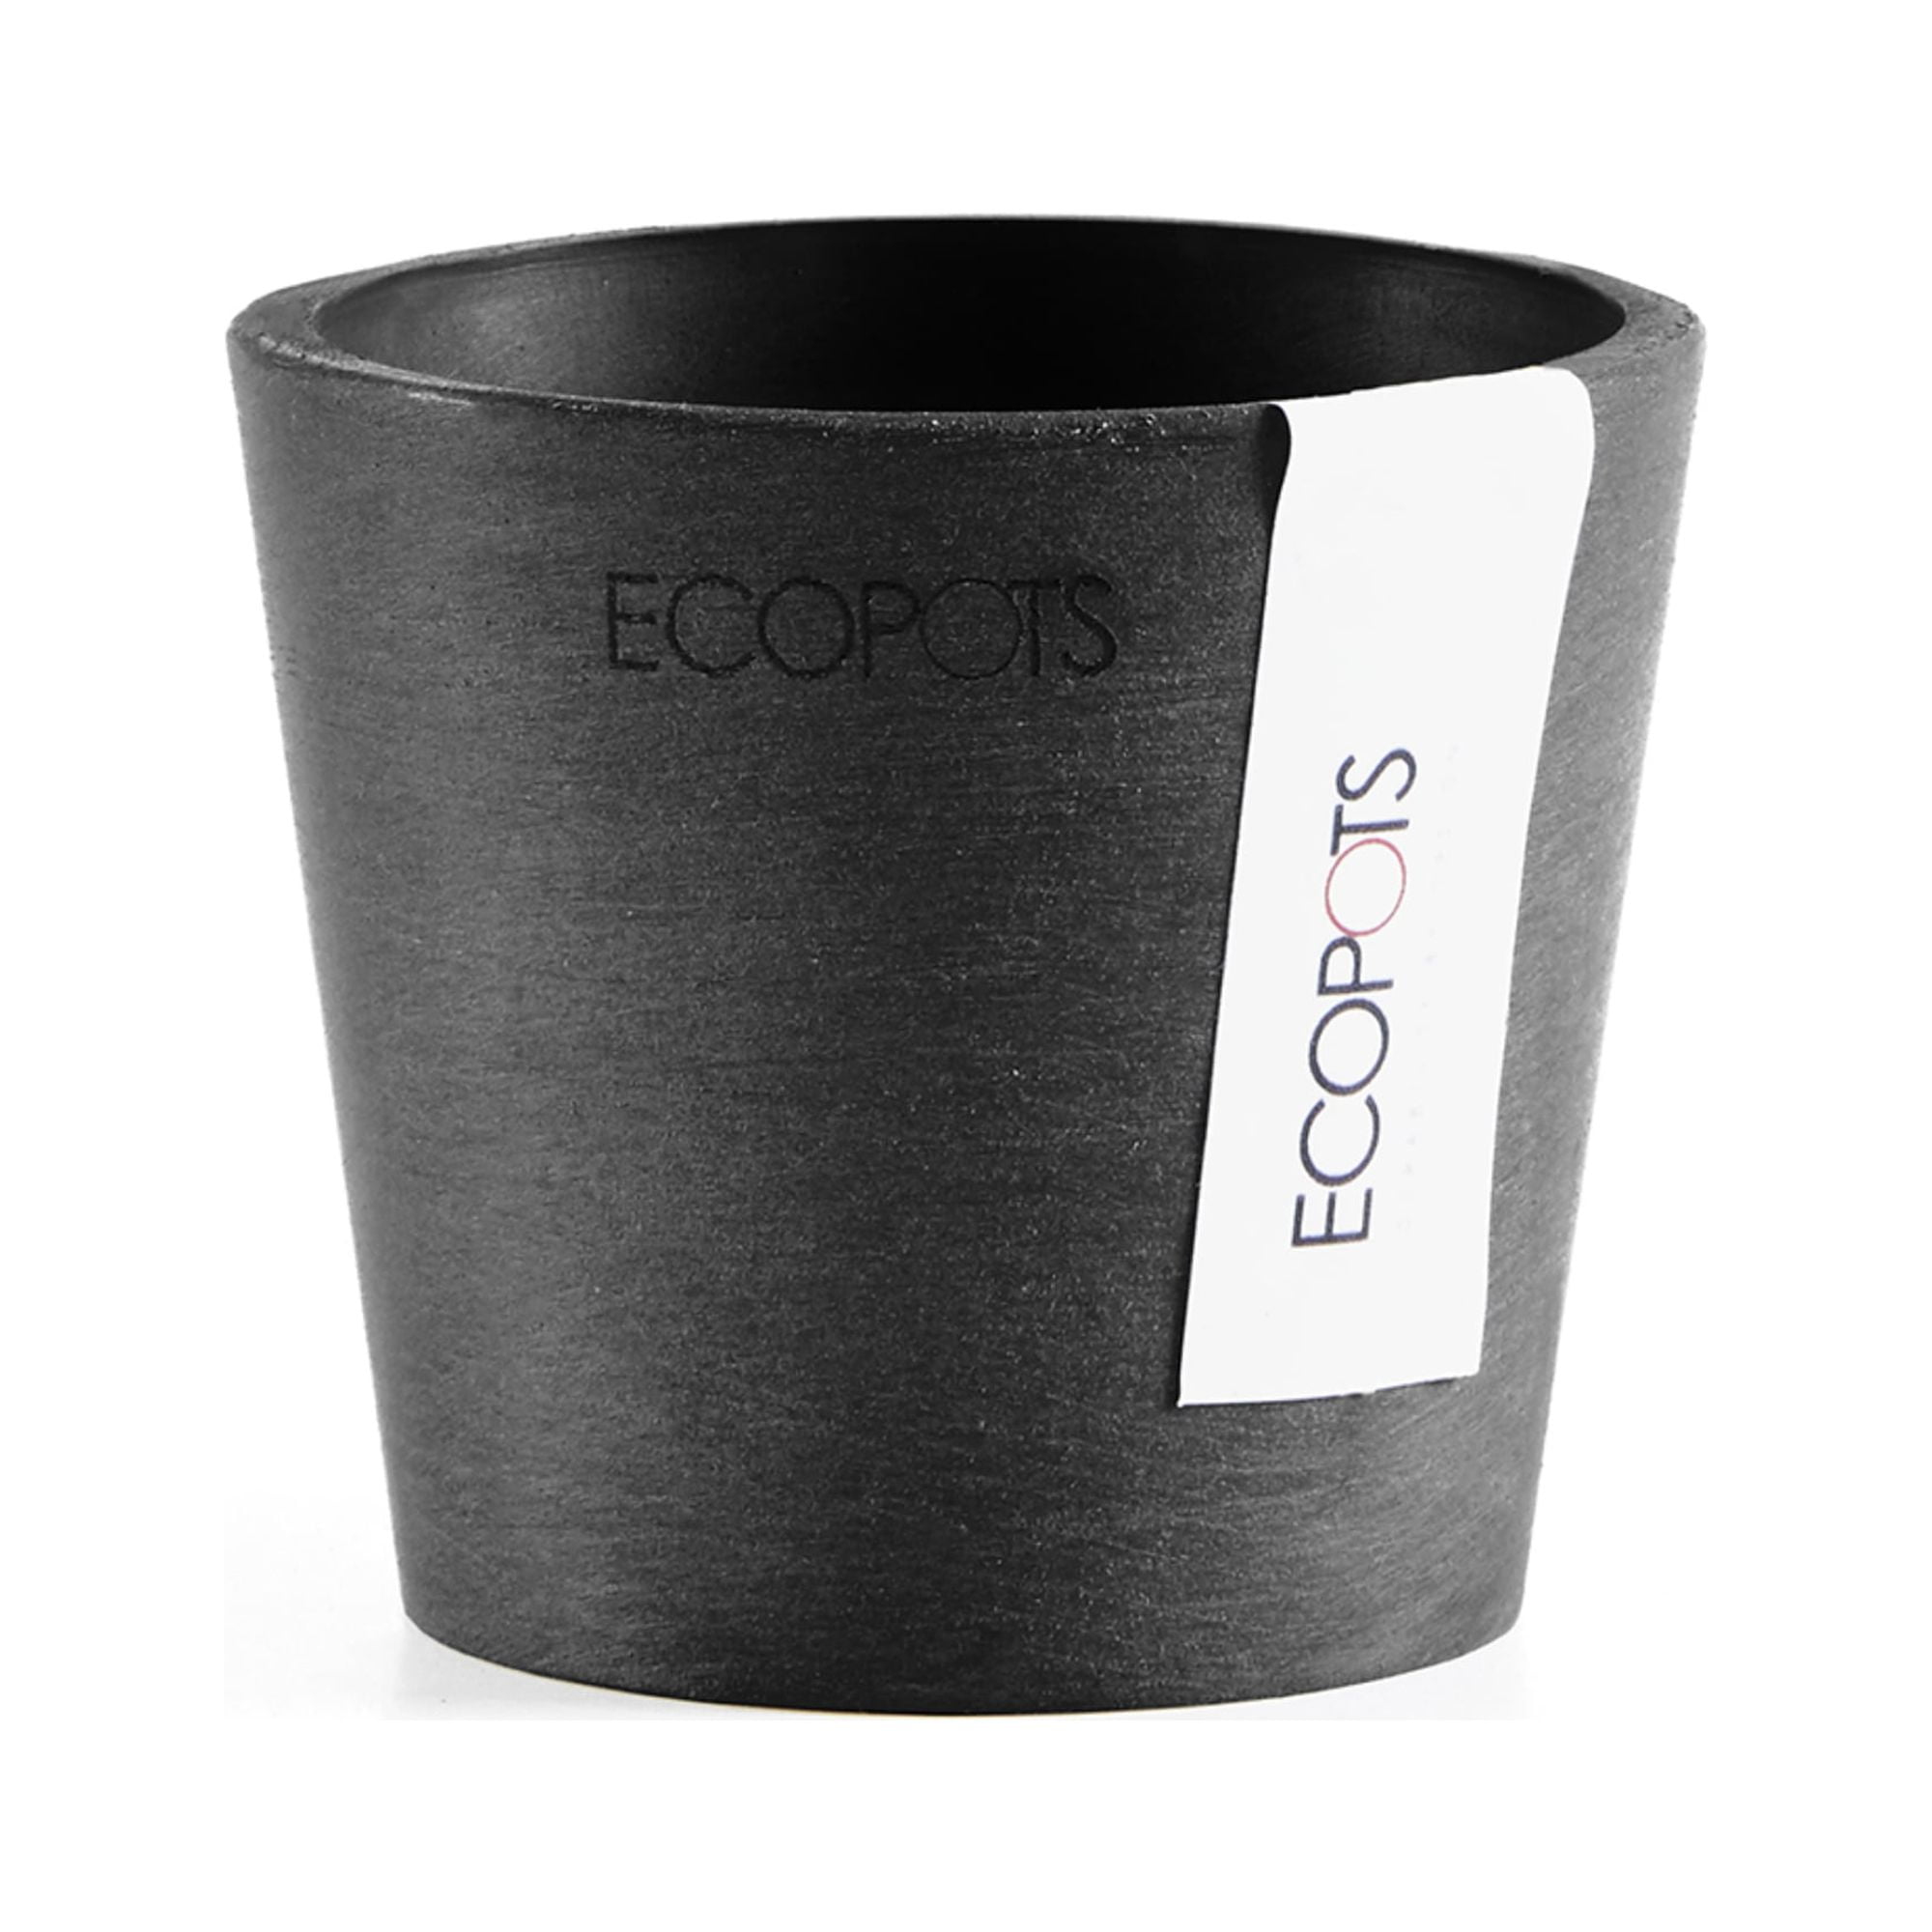 EcoPots Amsterdam Durable Indoor/Outdoor Modern Round Recycled Plastic  Planter Flower Pot, Dark Grey, 3